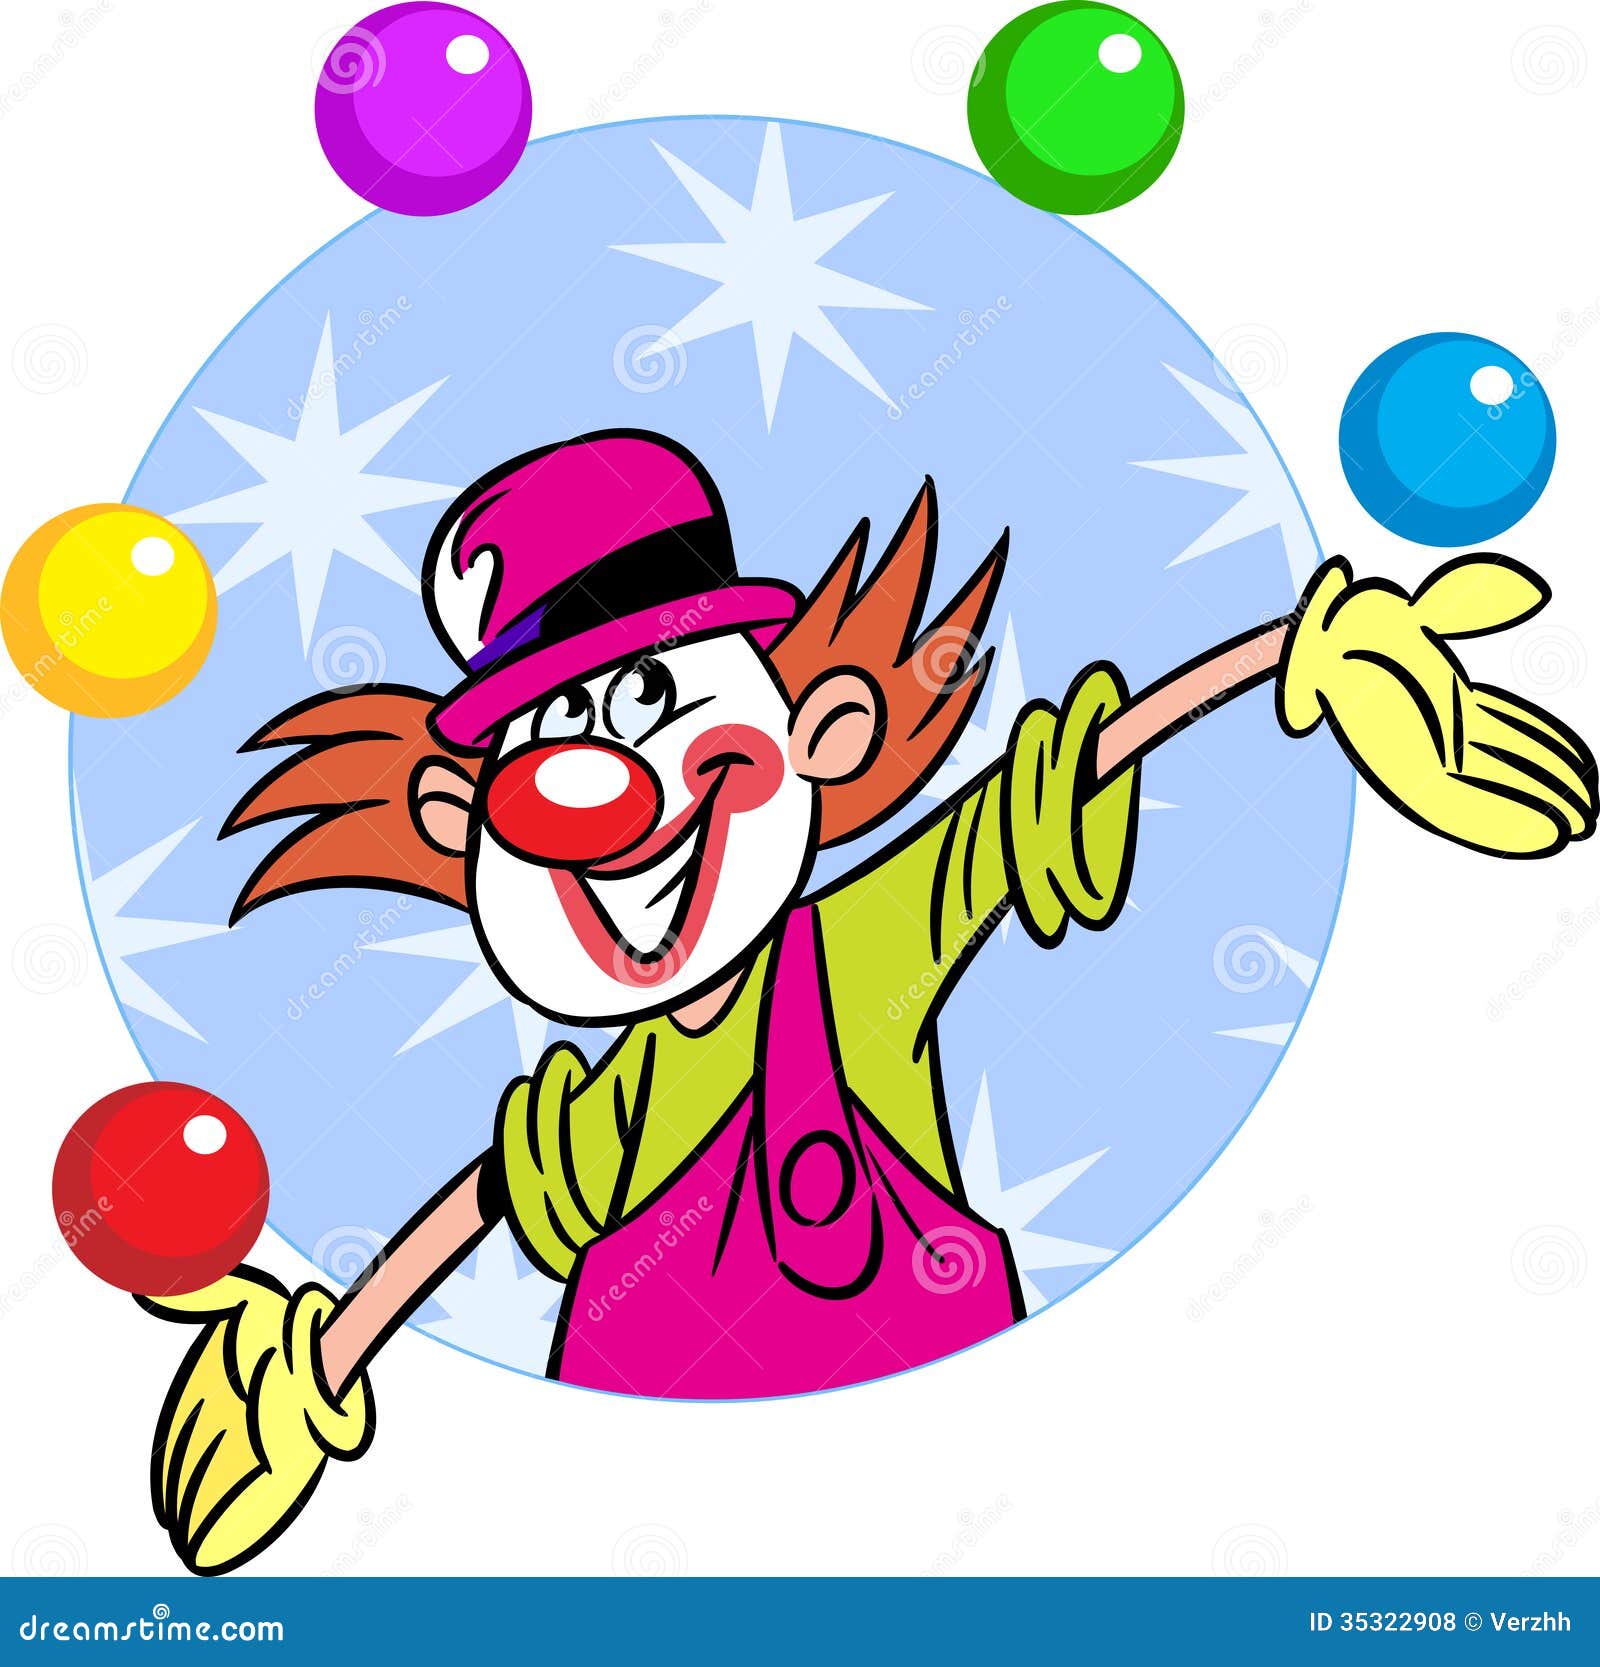 animated juggler clipart - photo #43